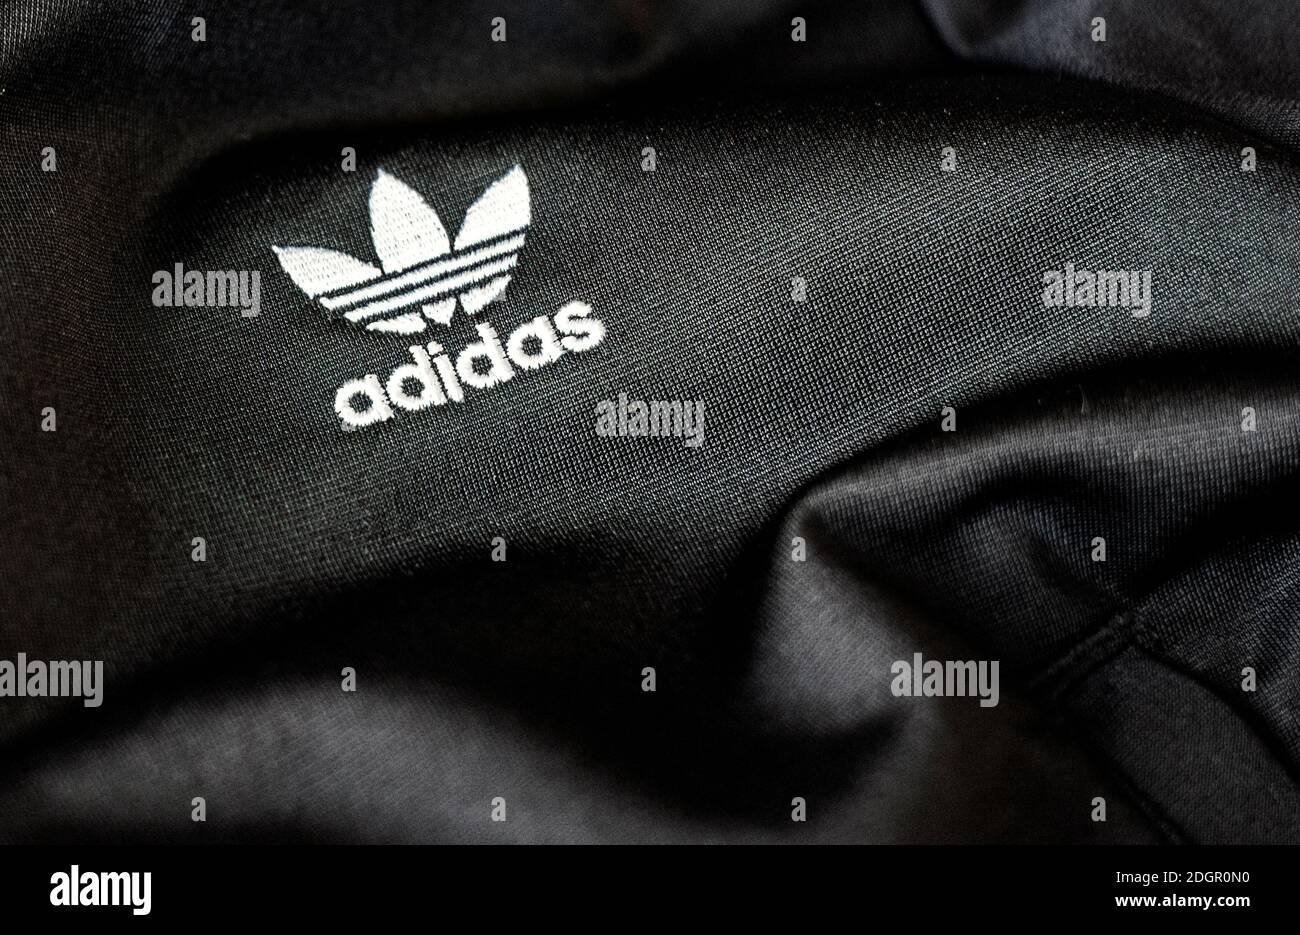 Adidas trainingsanzug -Fotos und -Bildmaterial in hoher Auflösung – Alamy